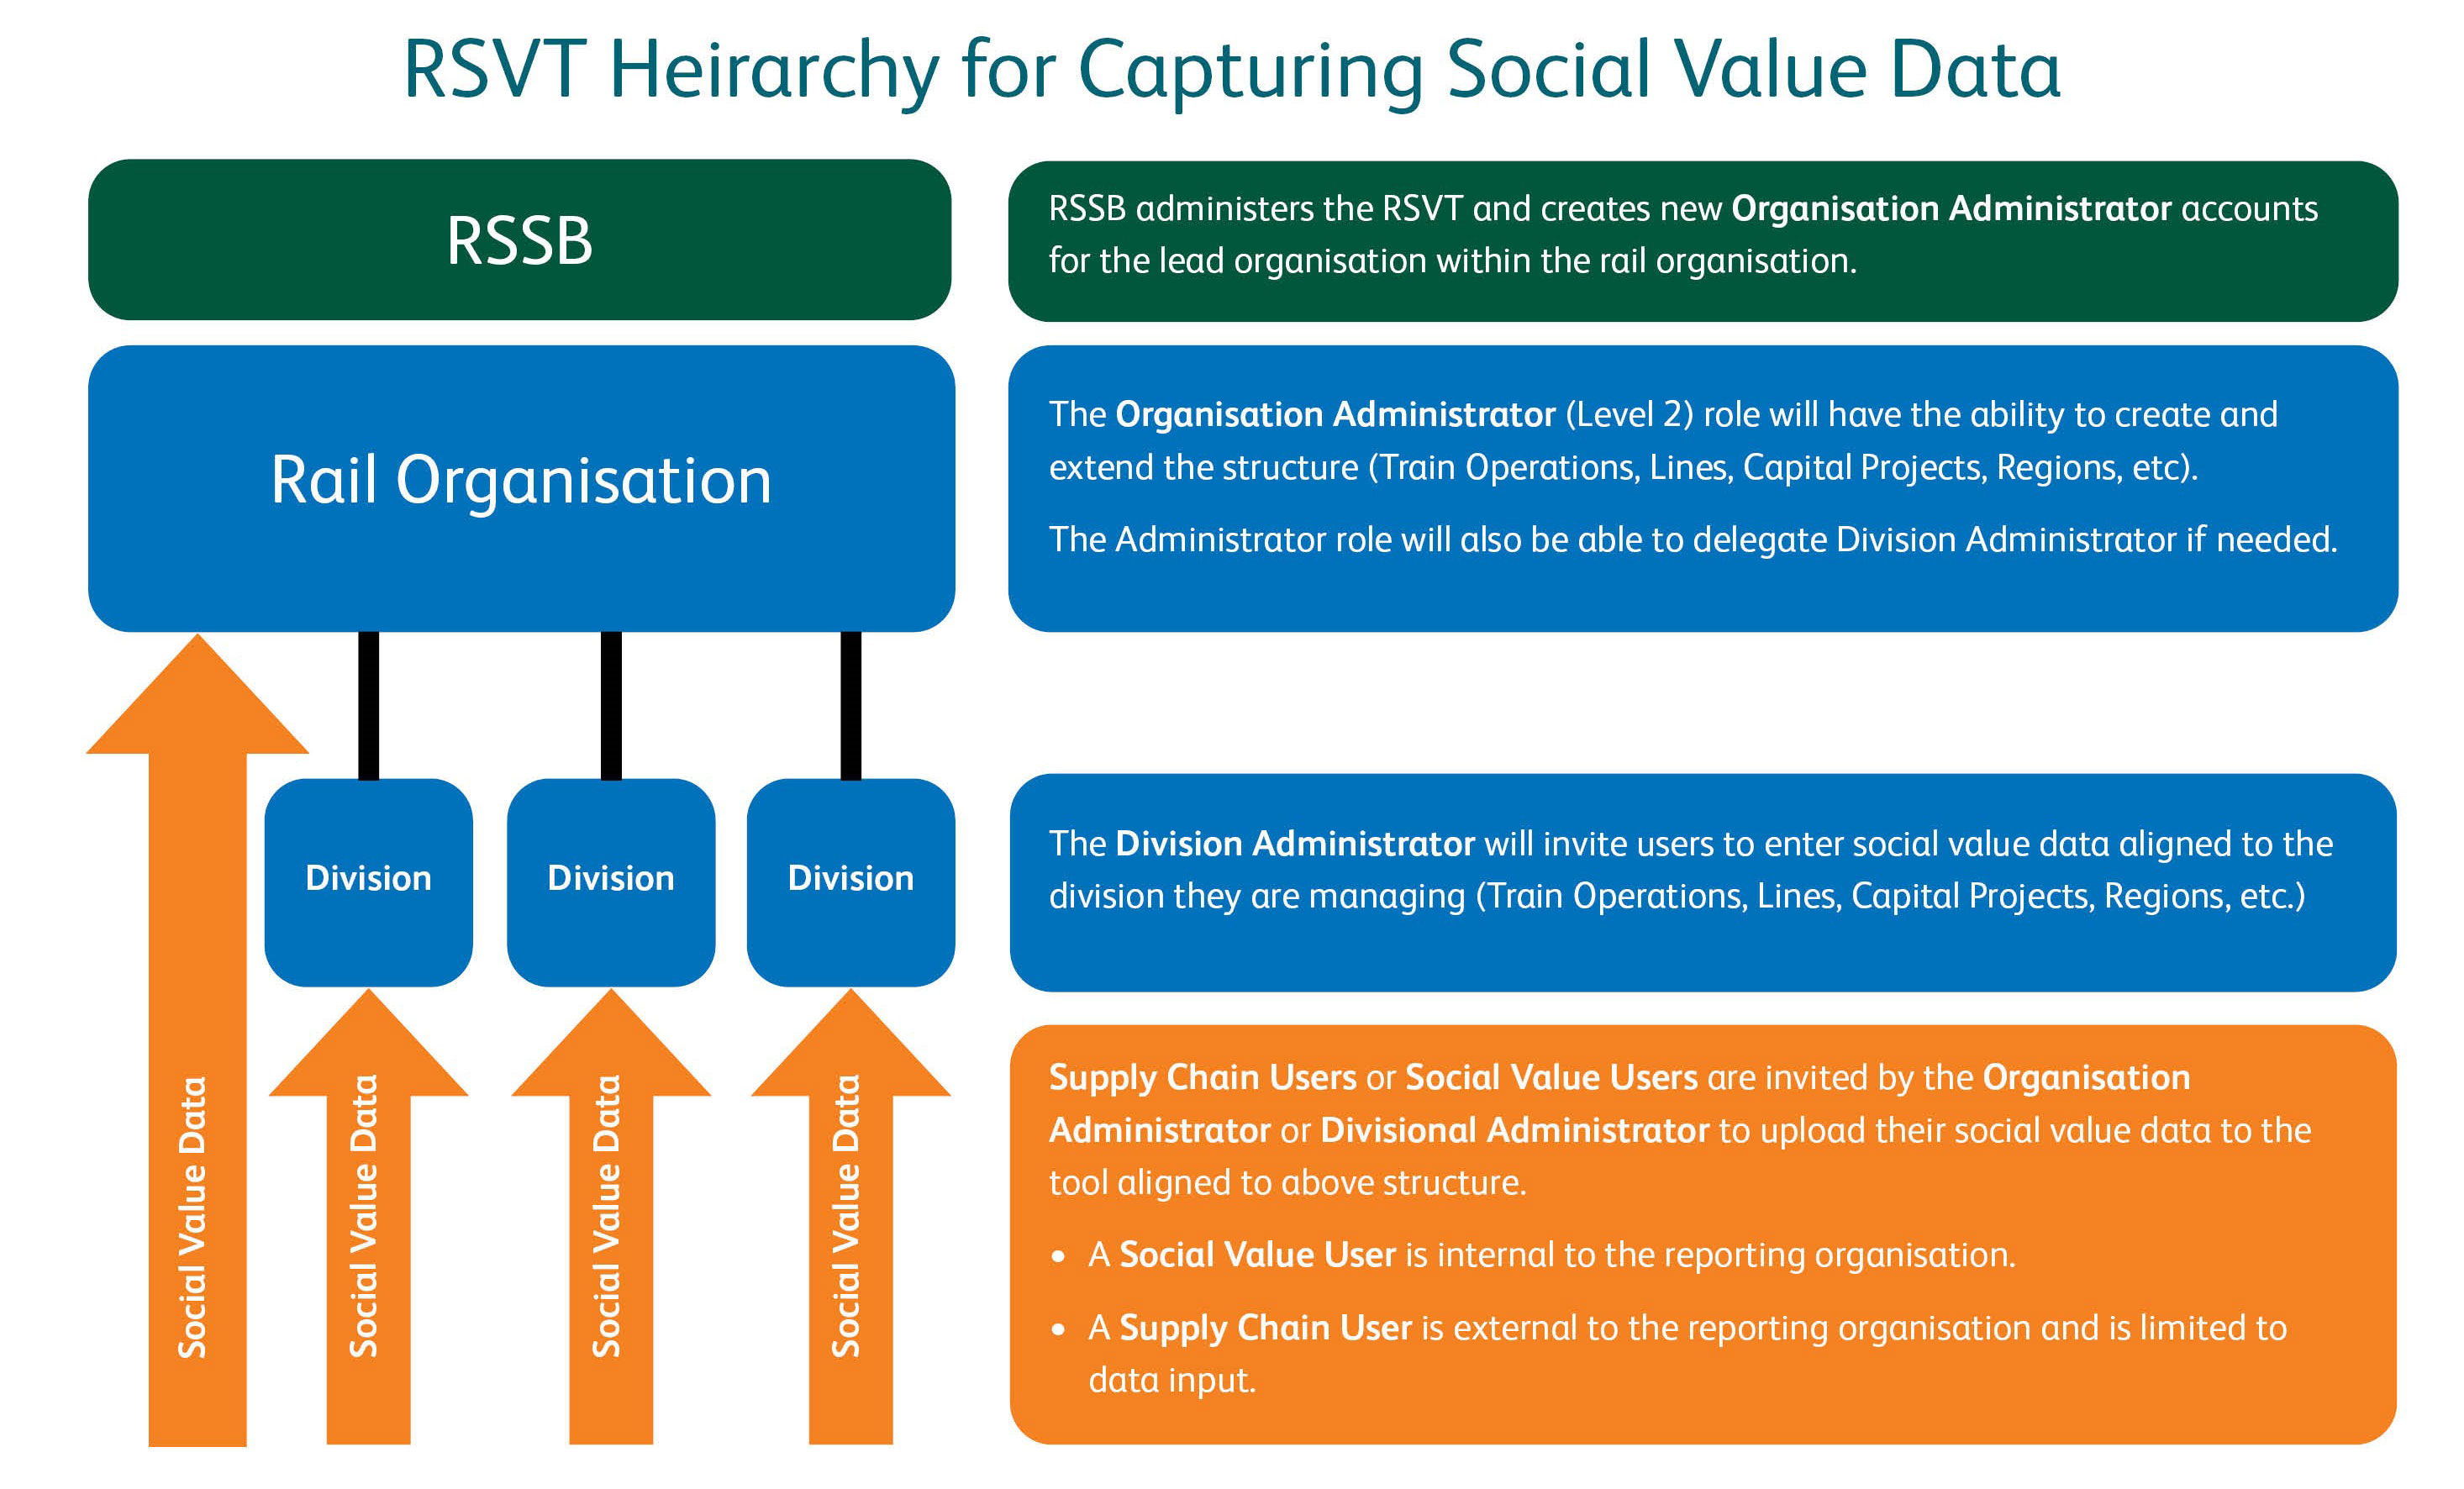 RSVT hierarchy for capturing social value data - diagram